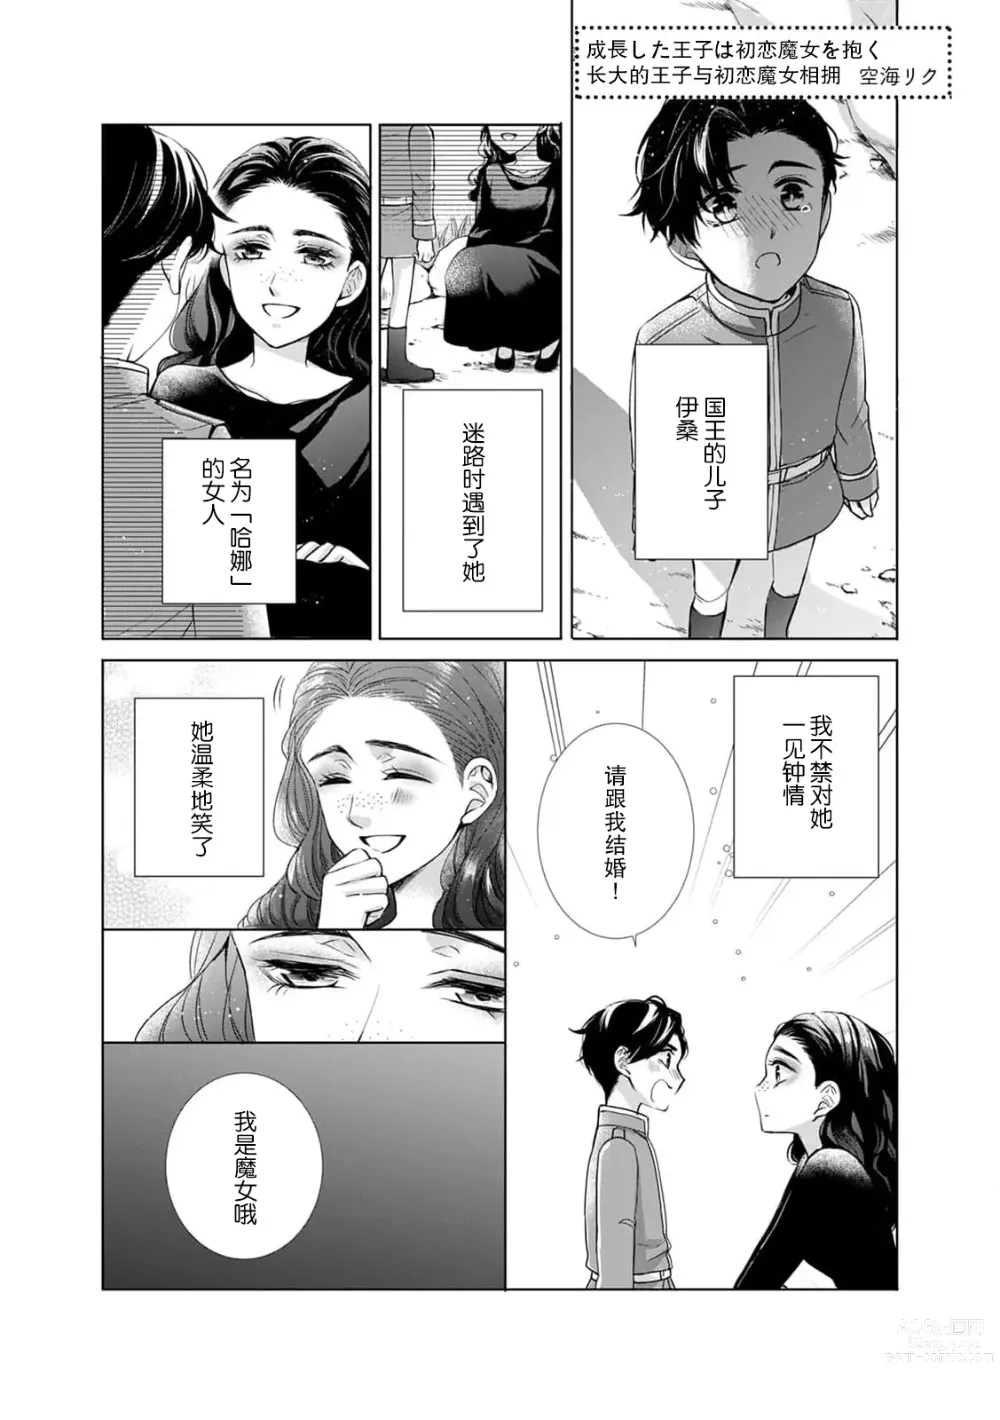 Page 2 of manga ​ 长大后的王子与初恋魔女相拥